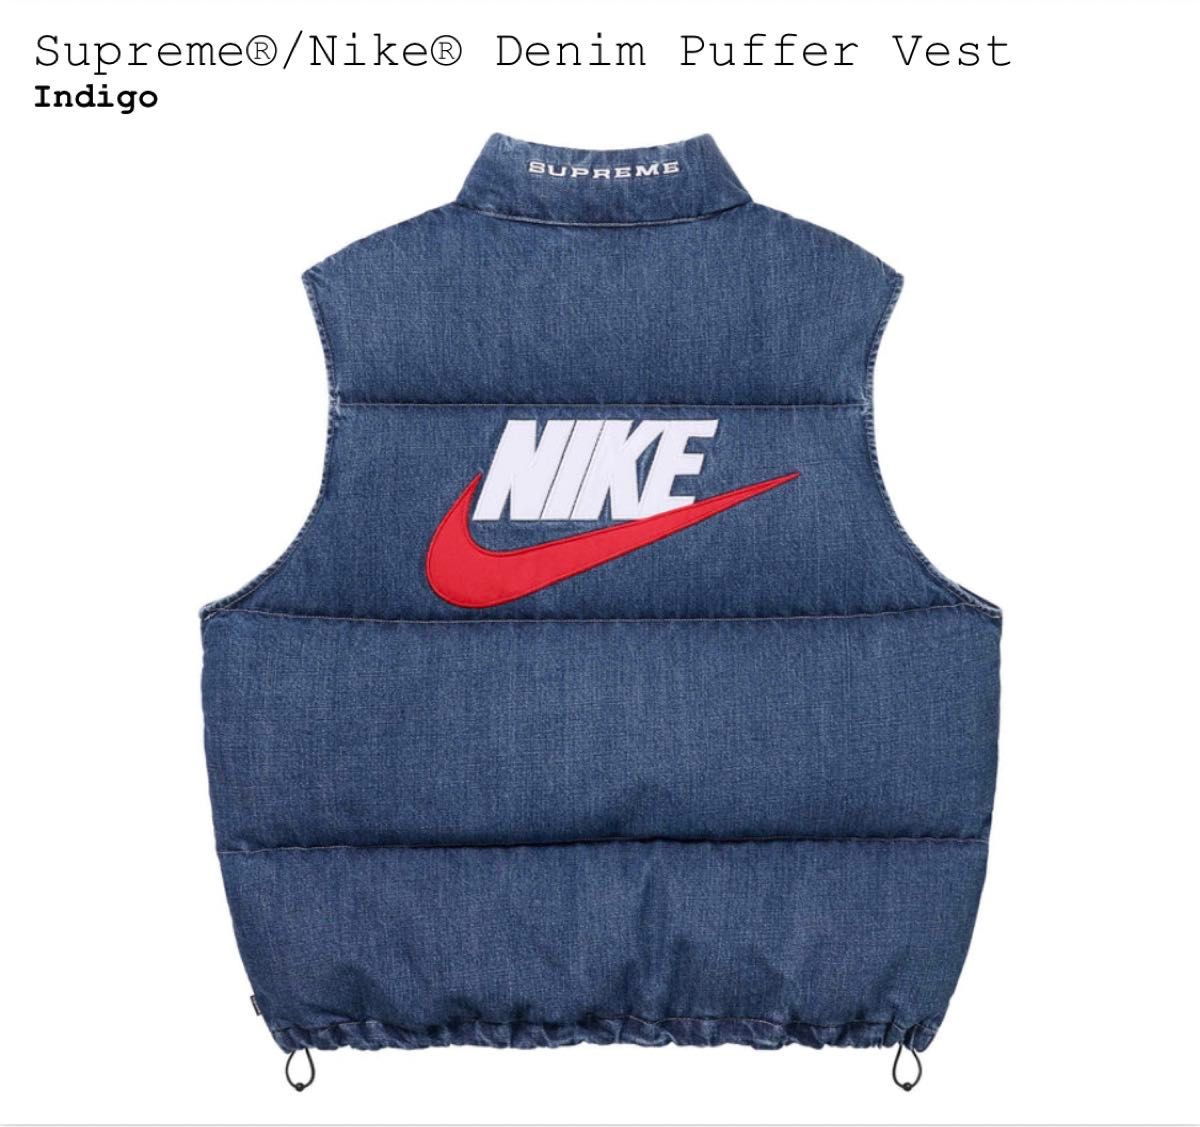 Supreme x Nike Denim Puffer Vest "Indigo"